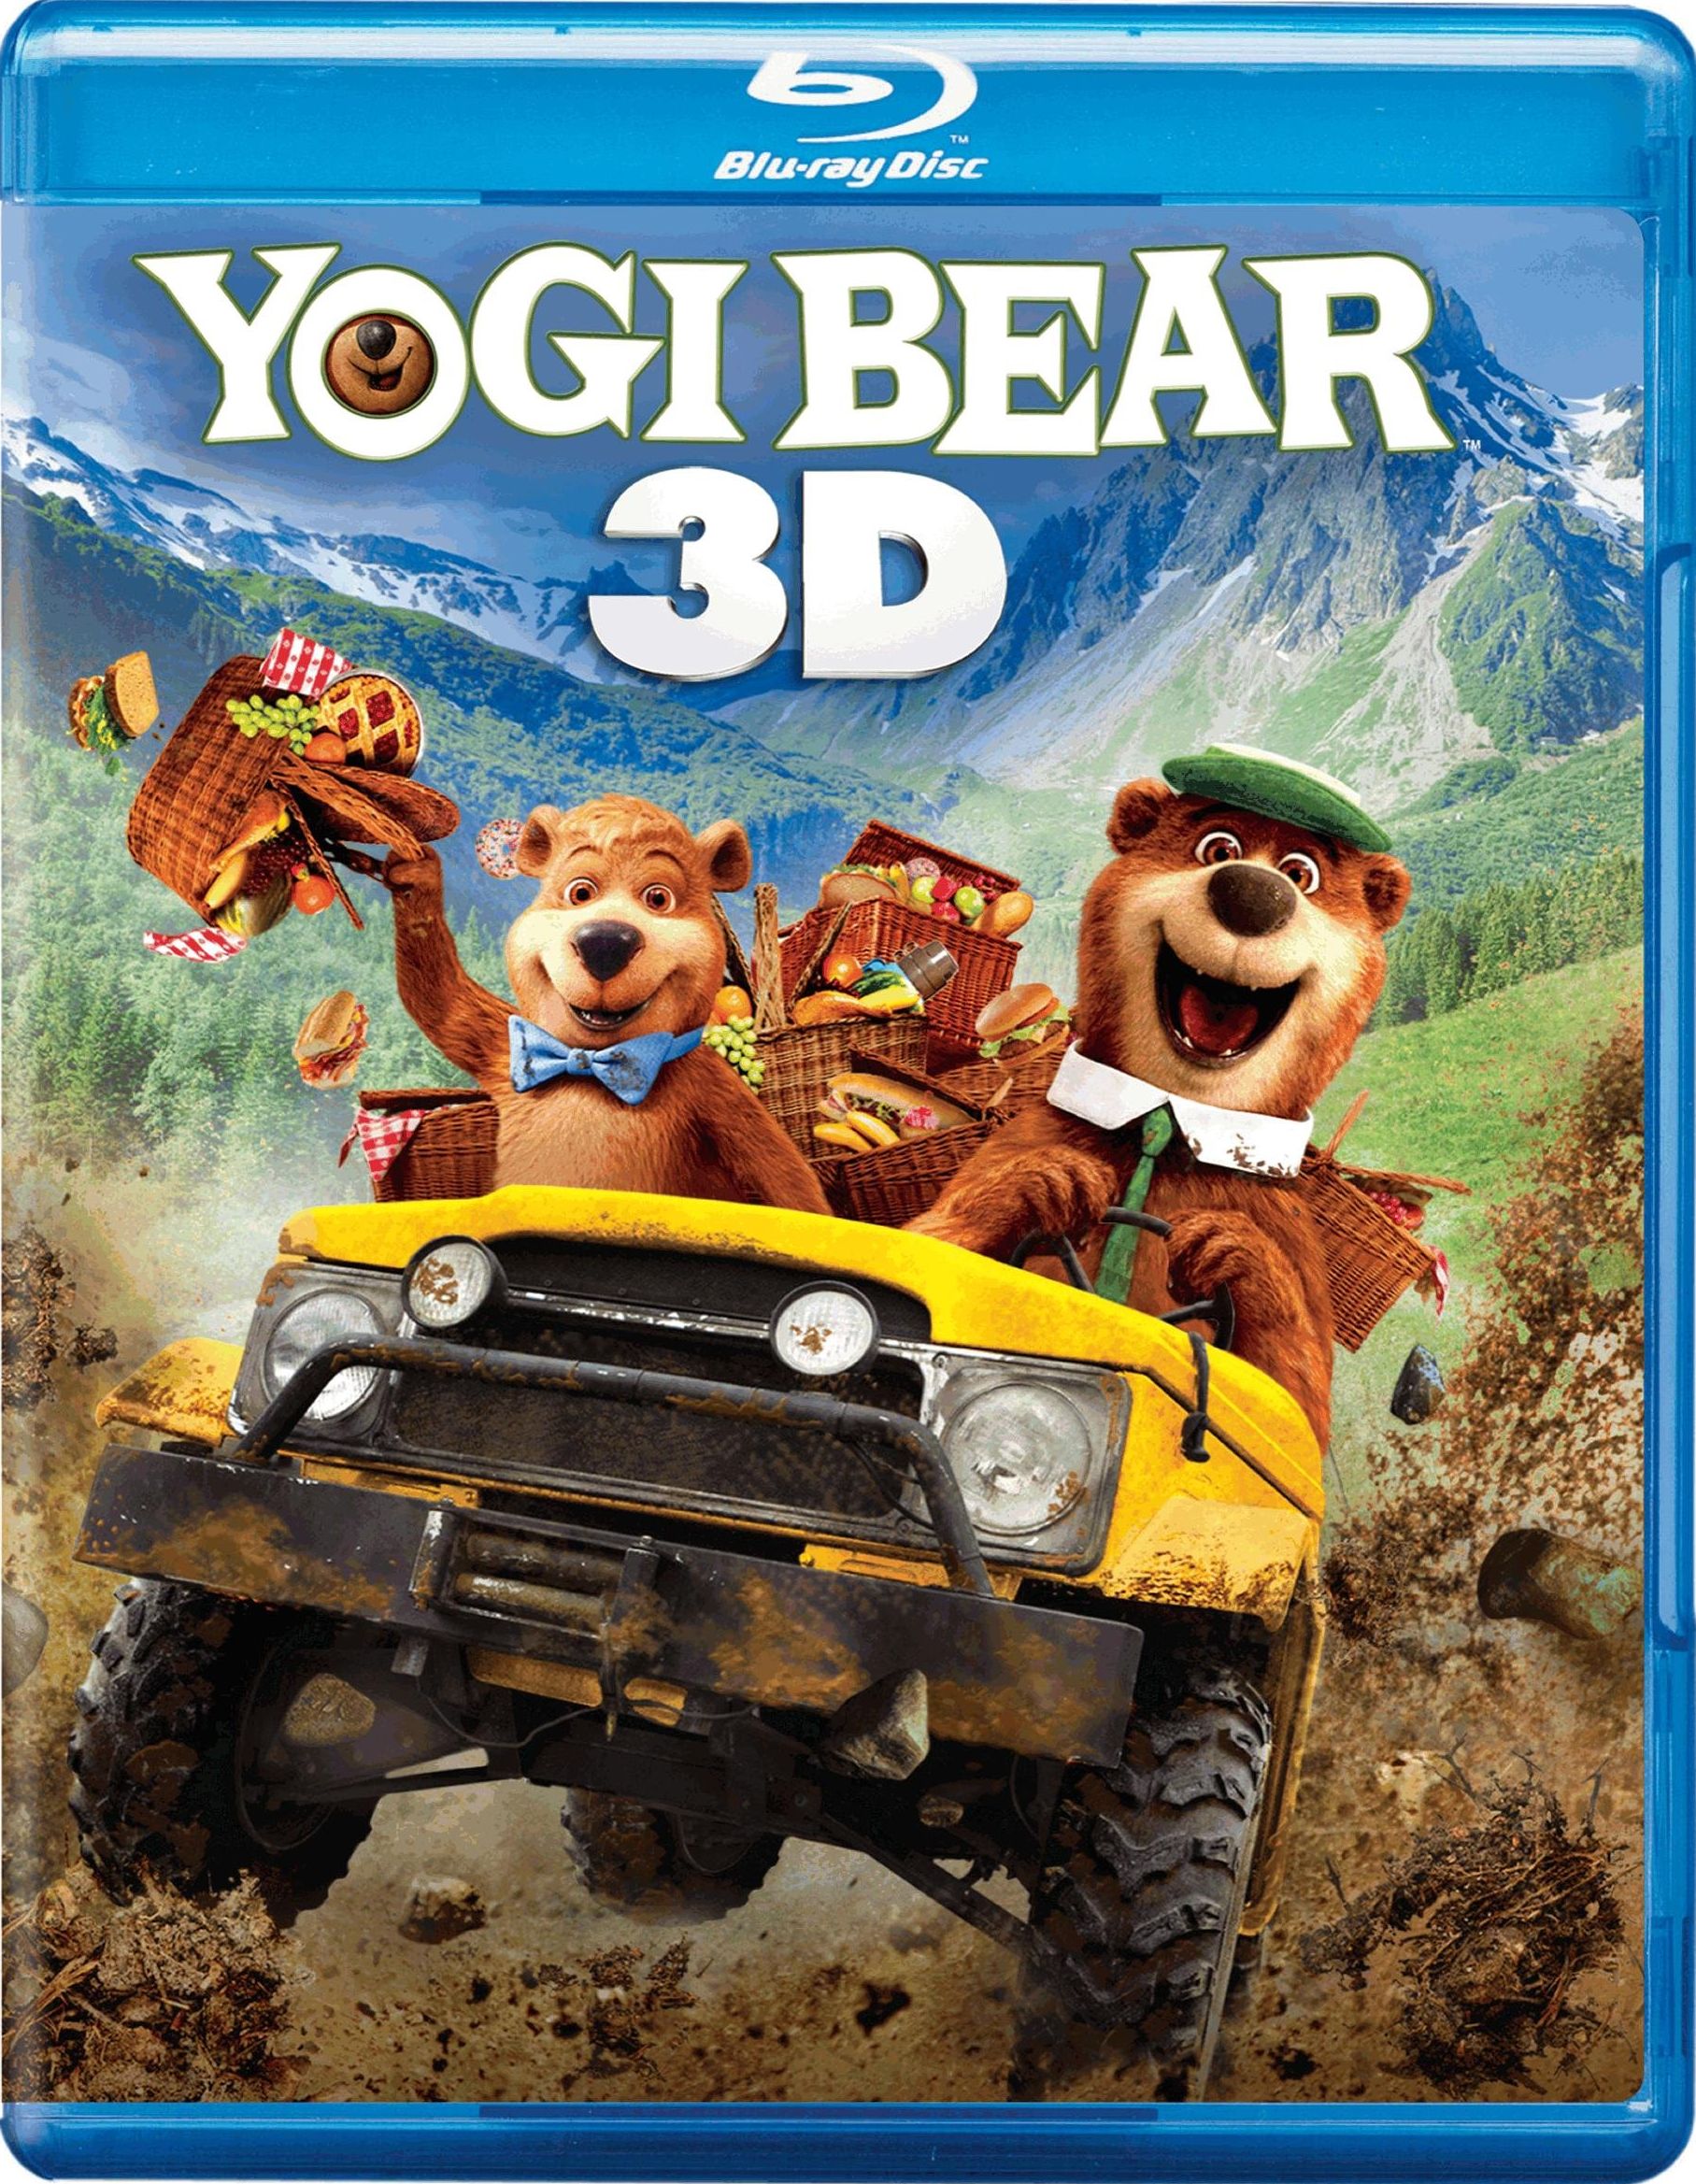 Yogi Bear DVD Release Date March 22, 2011